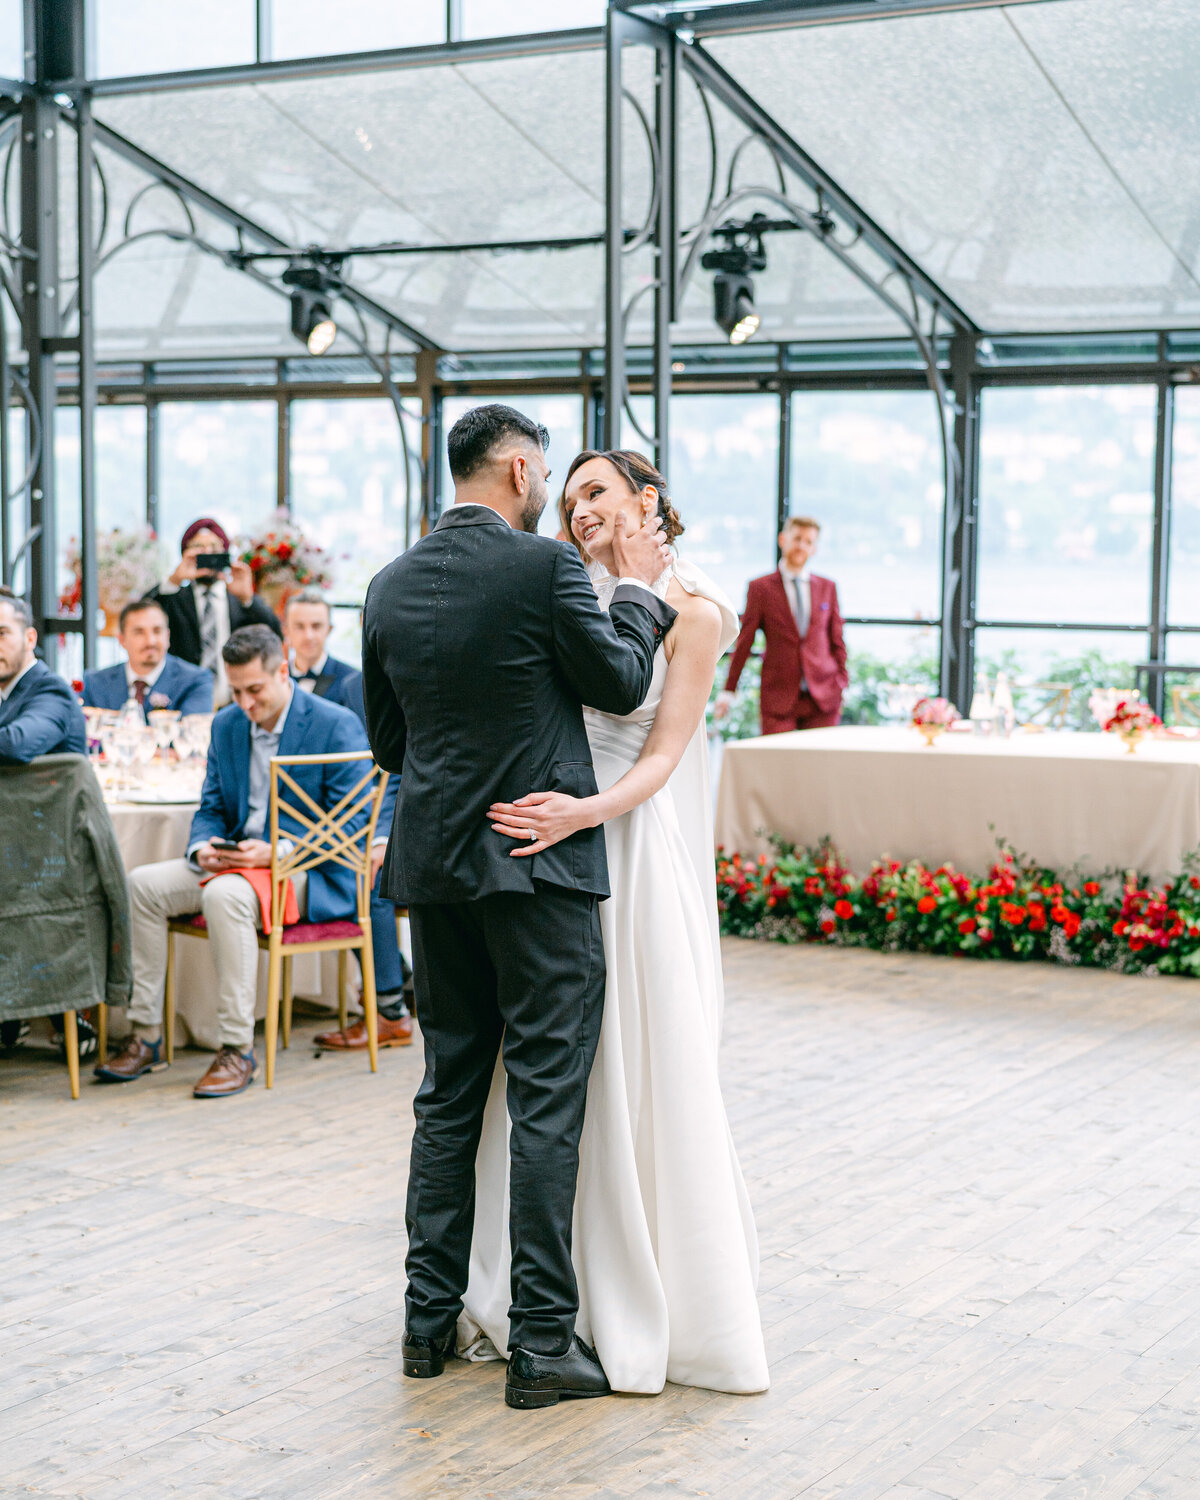 Fleeting moment with bride and groom at Lake Como wedding